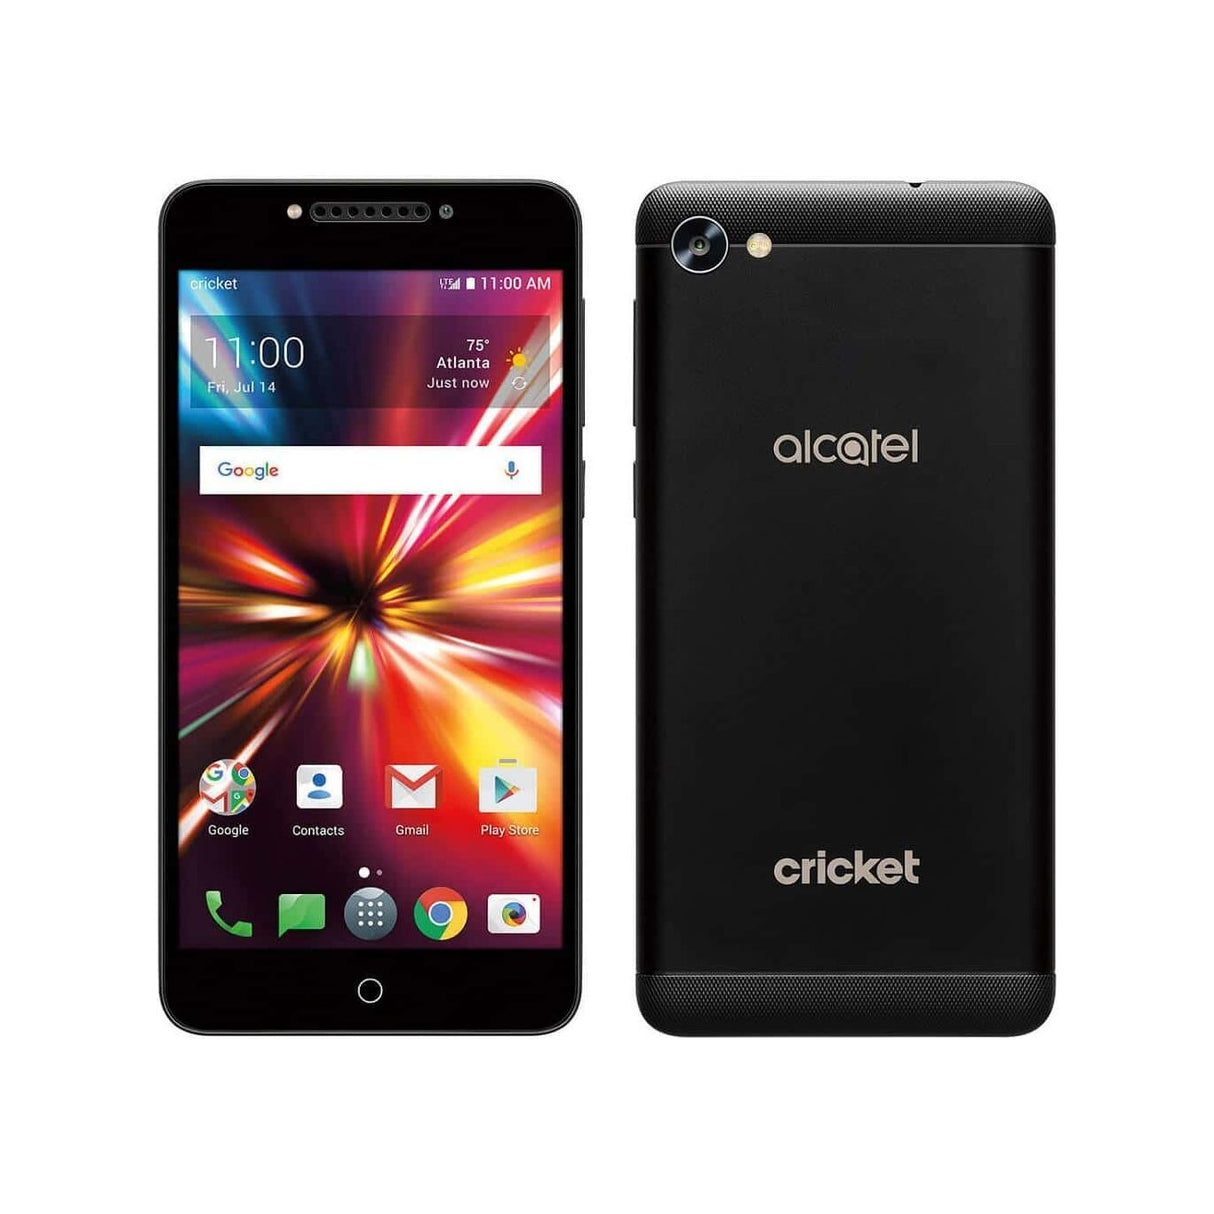 Alcatel Cricket Pulsemix Android Smartphone - 16 GB - Black